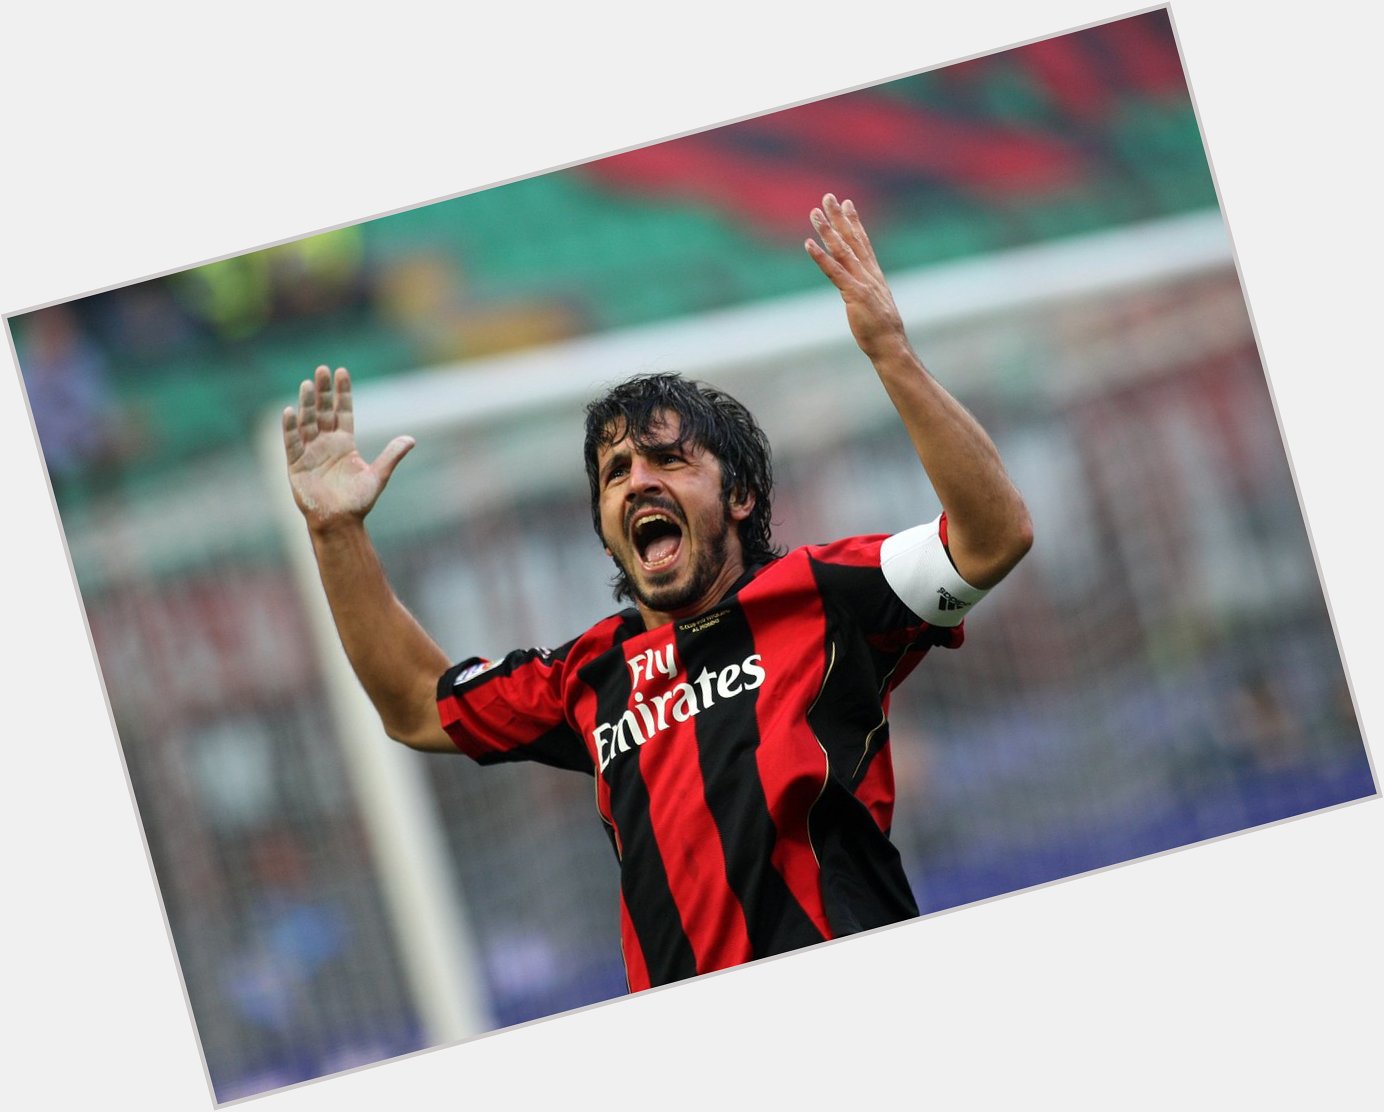 Happy Birthday Gennaro Gattuso  538 Appearances 14 Goals  16 Assists

Best ever Italian CDM?  